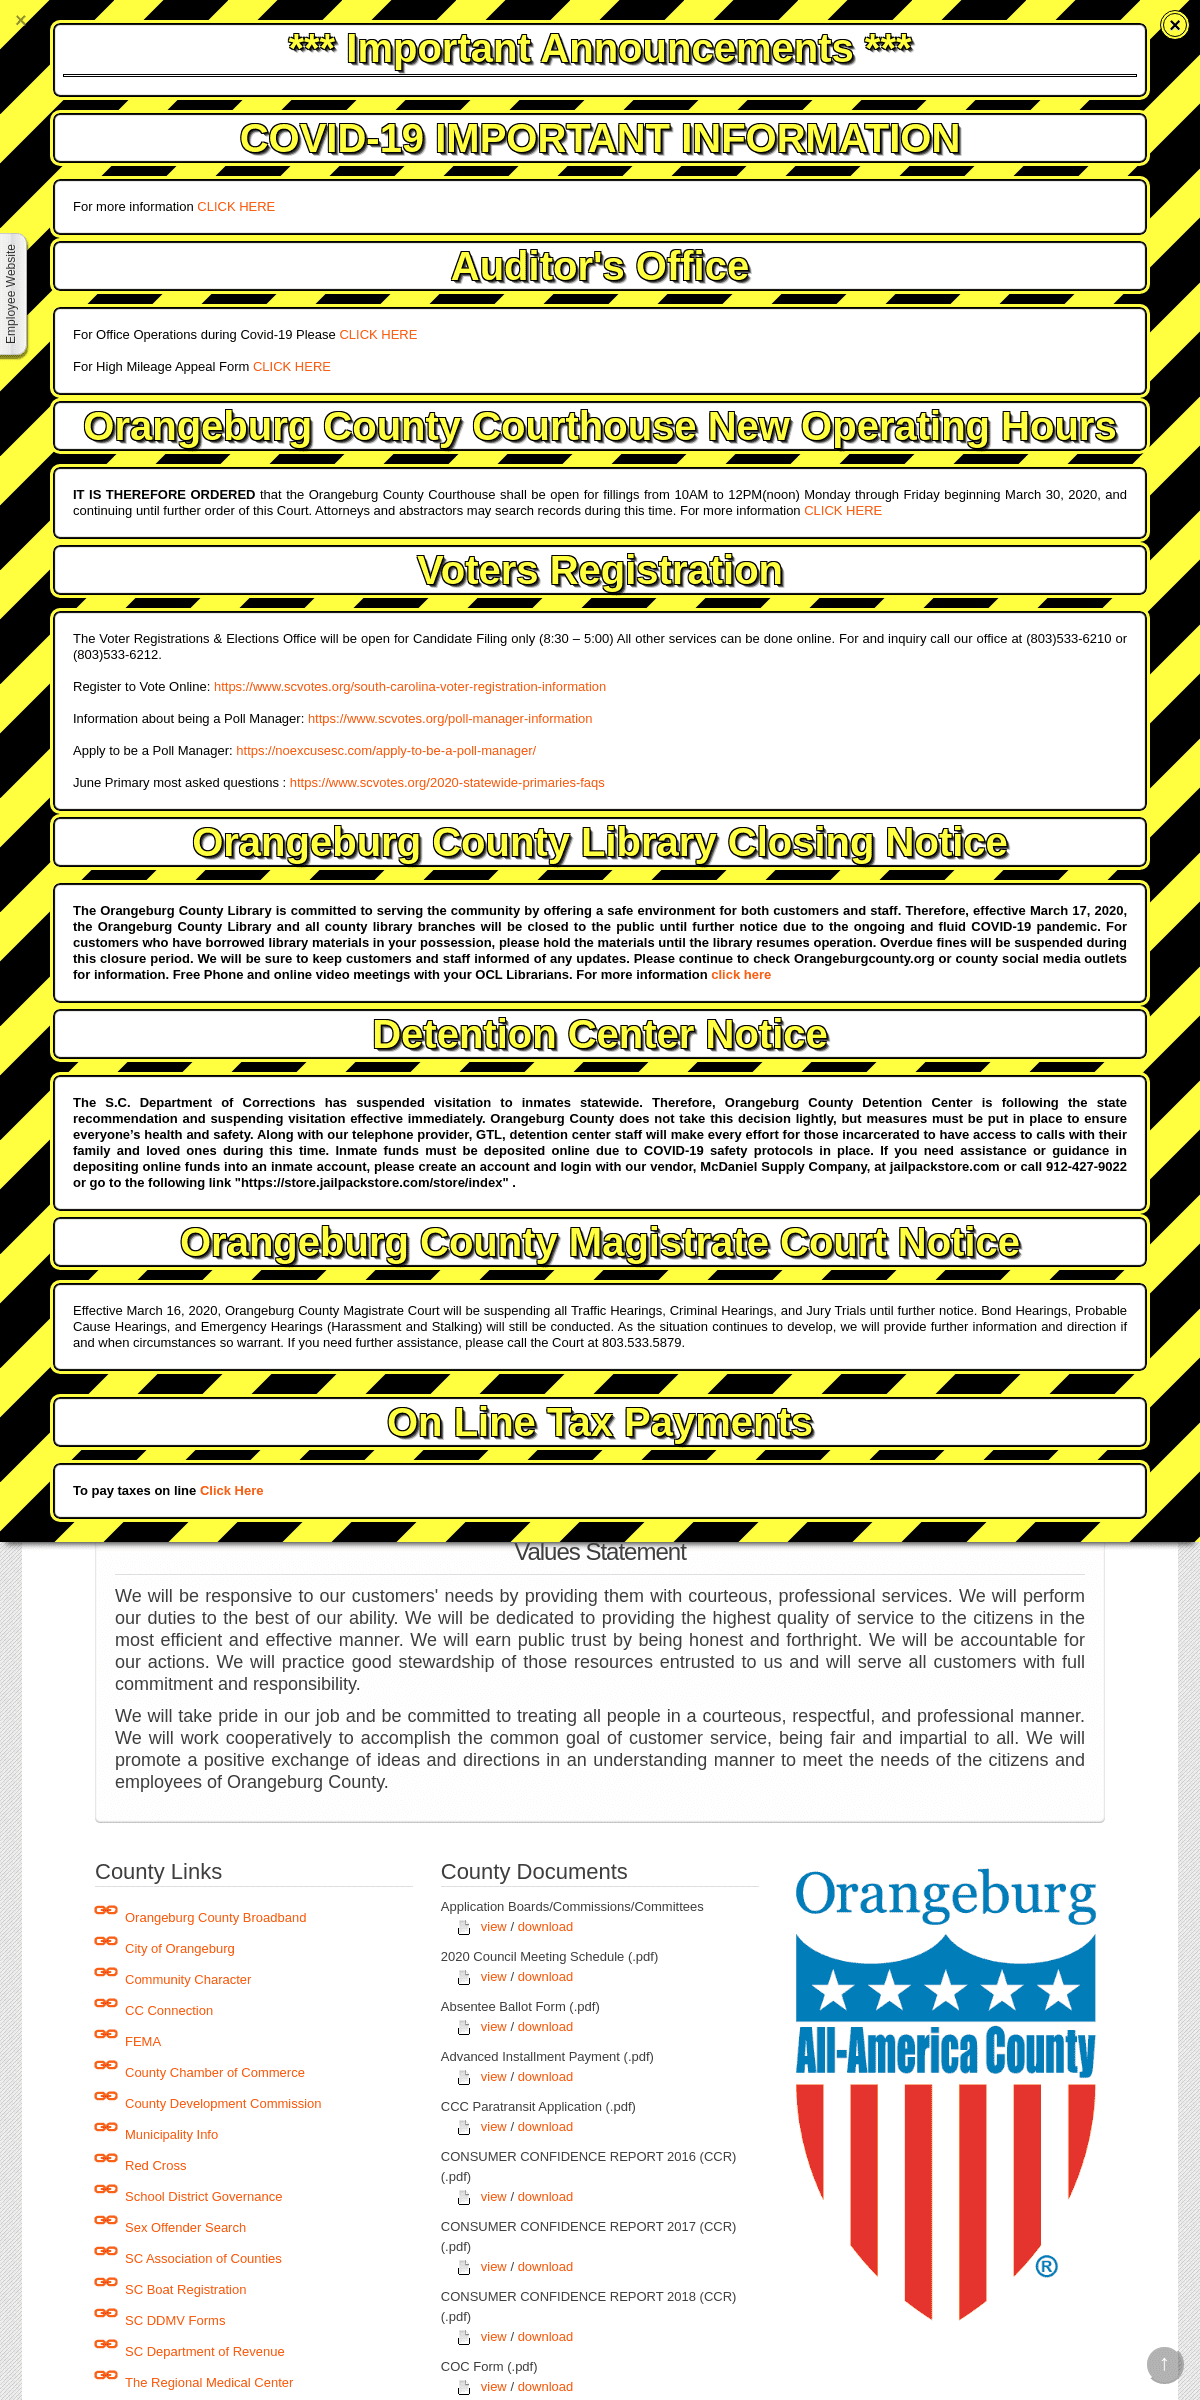 A complete backup of orangeburgcounty.org